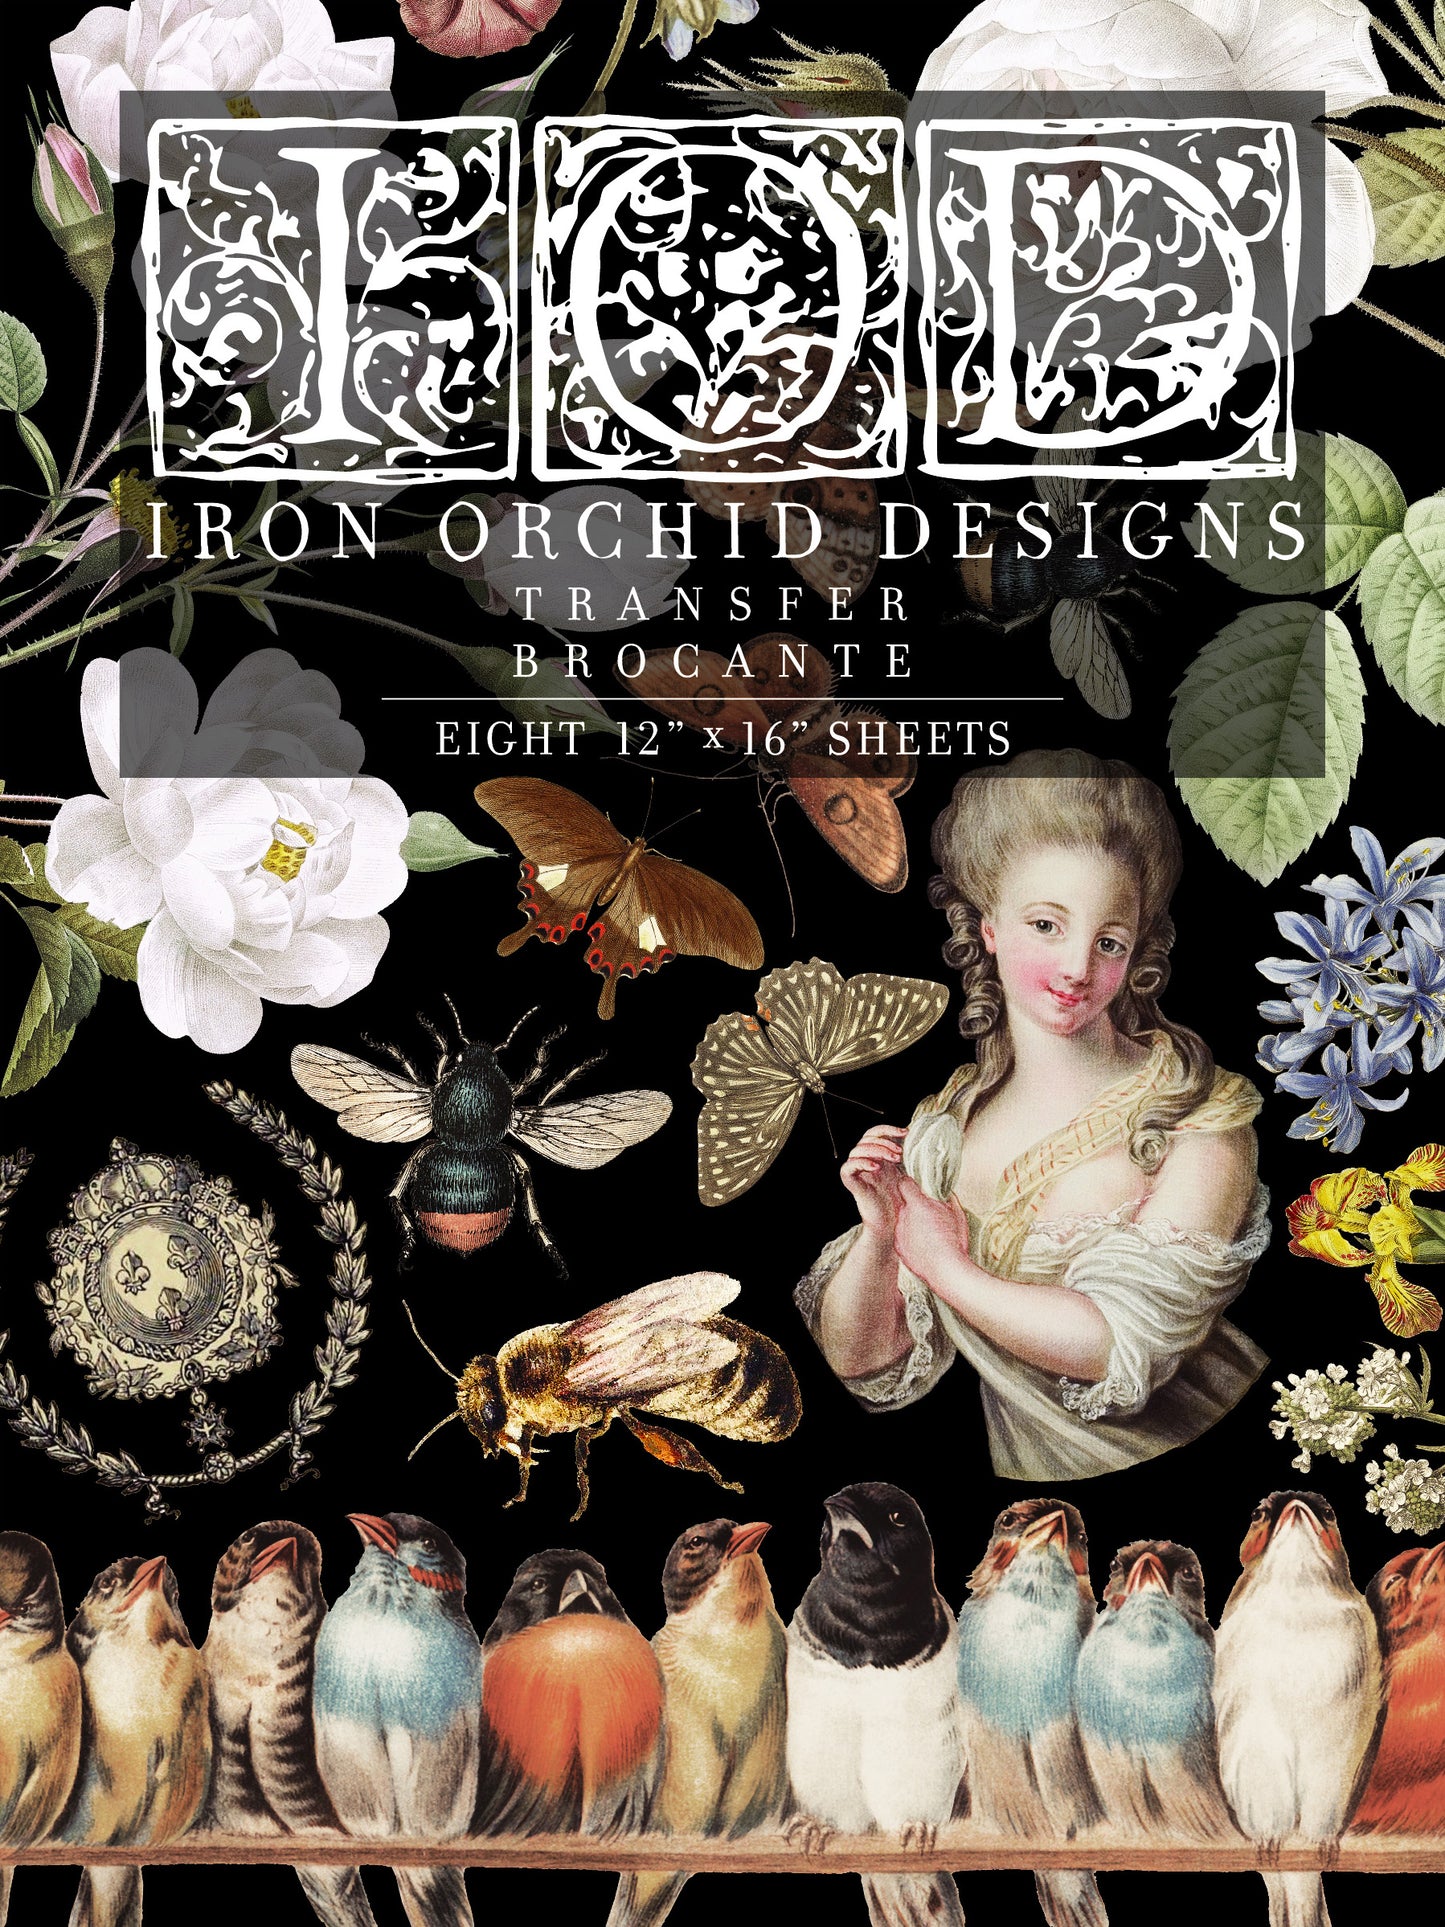 IOD Brocante Transfer - Iron Orchid Designs Transfer